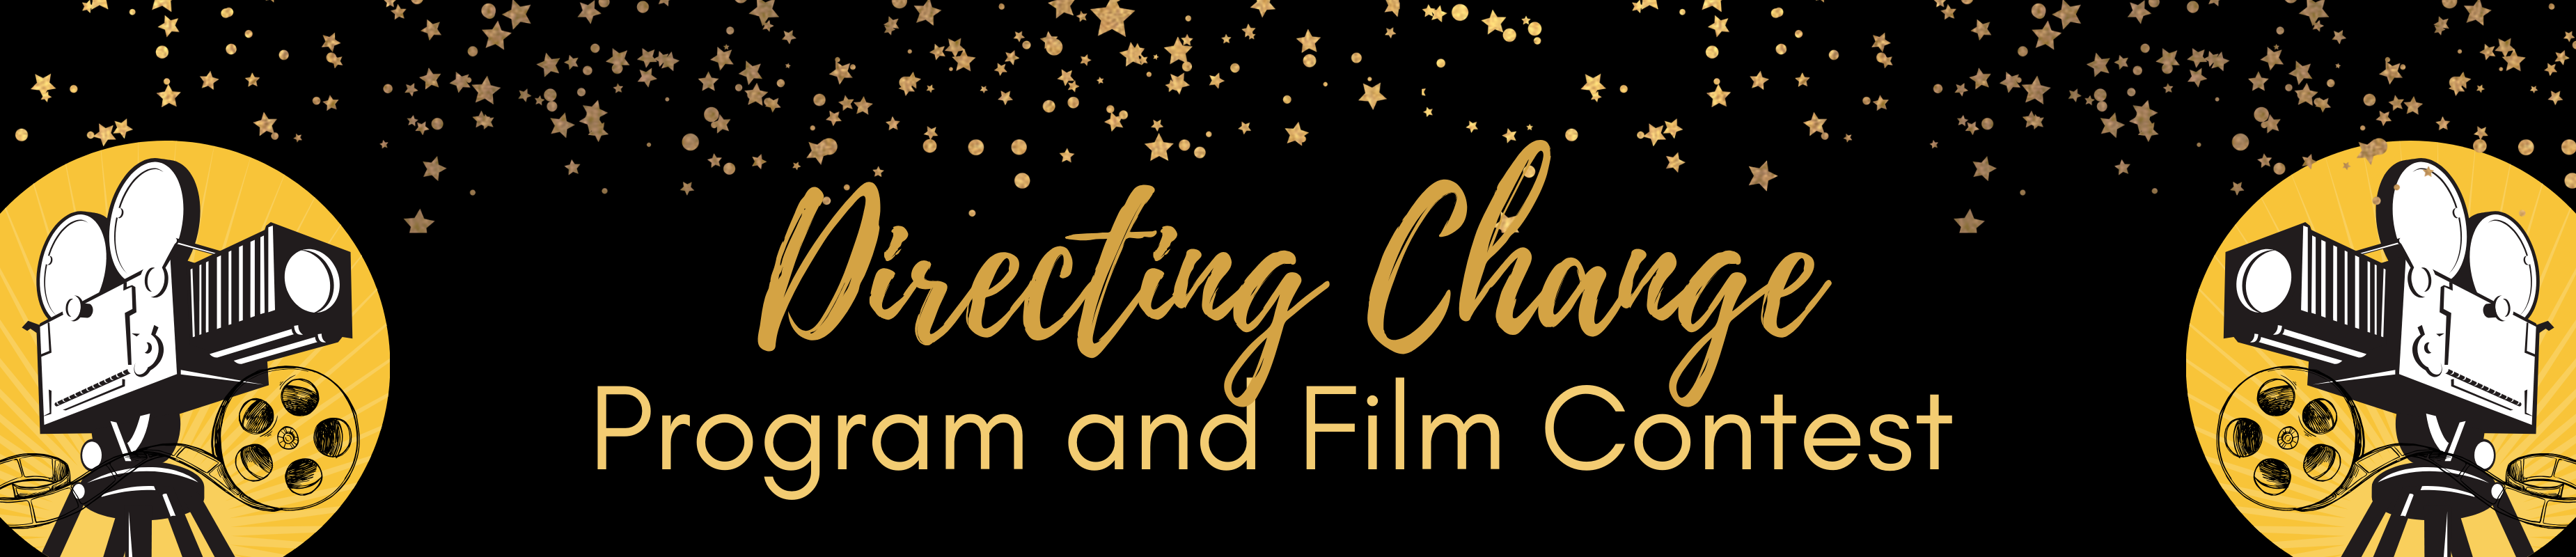 Directing Change Film Contest